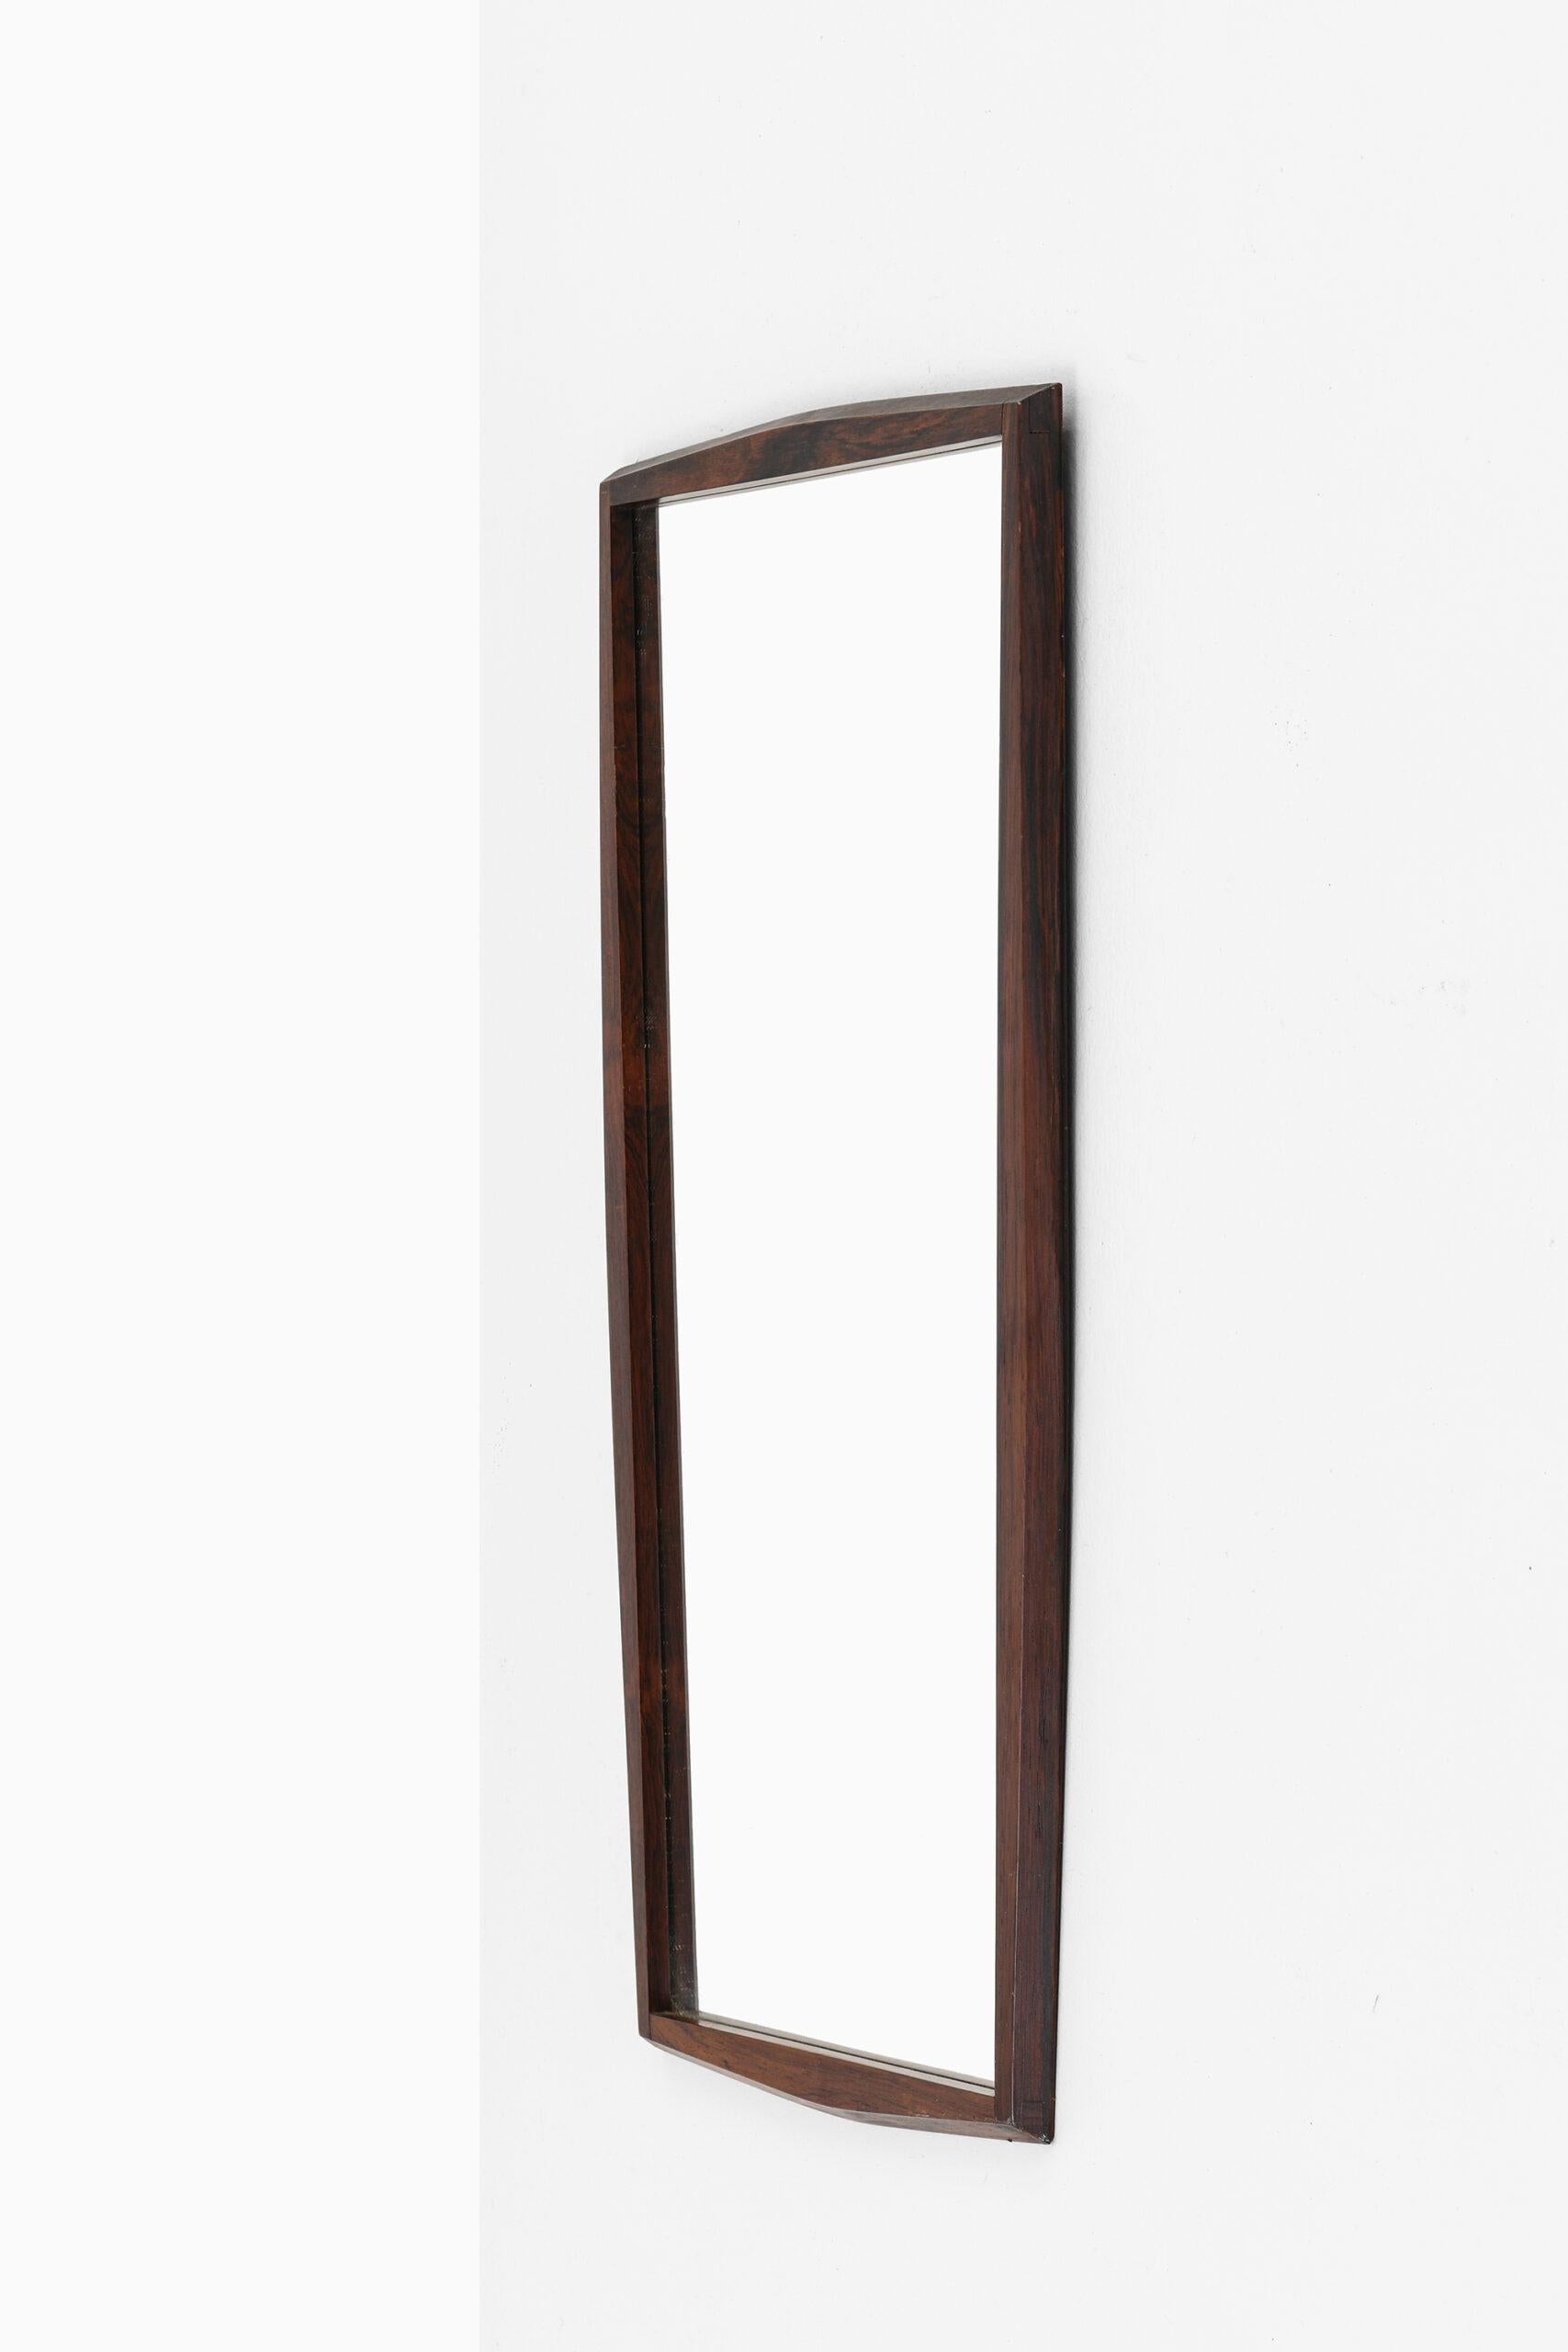 Mid-20th Century Mirror Produced by Jansen Spejle in Denmark